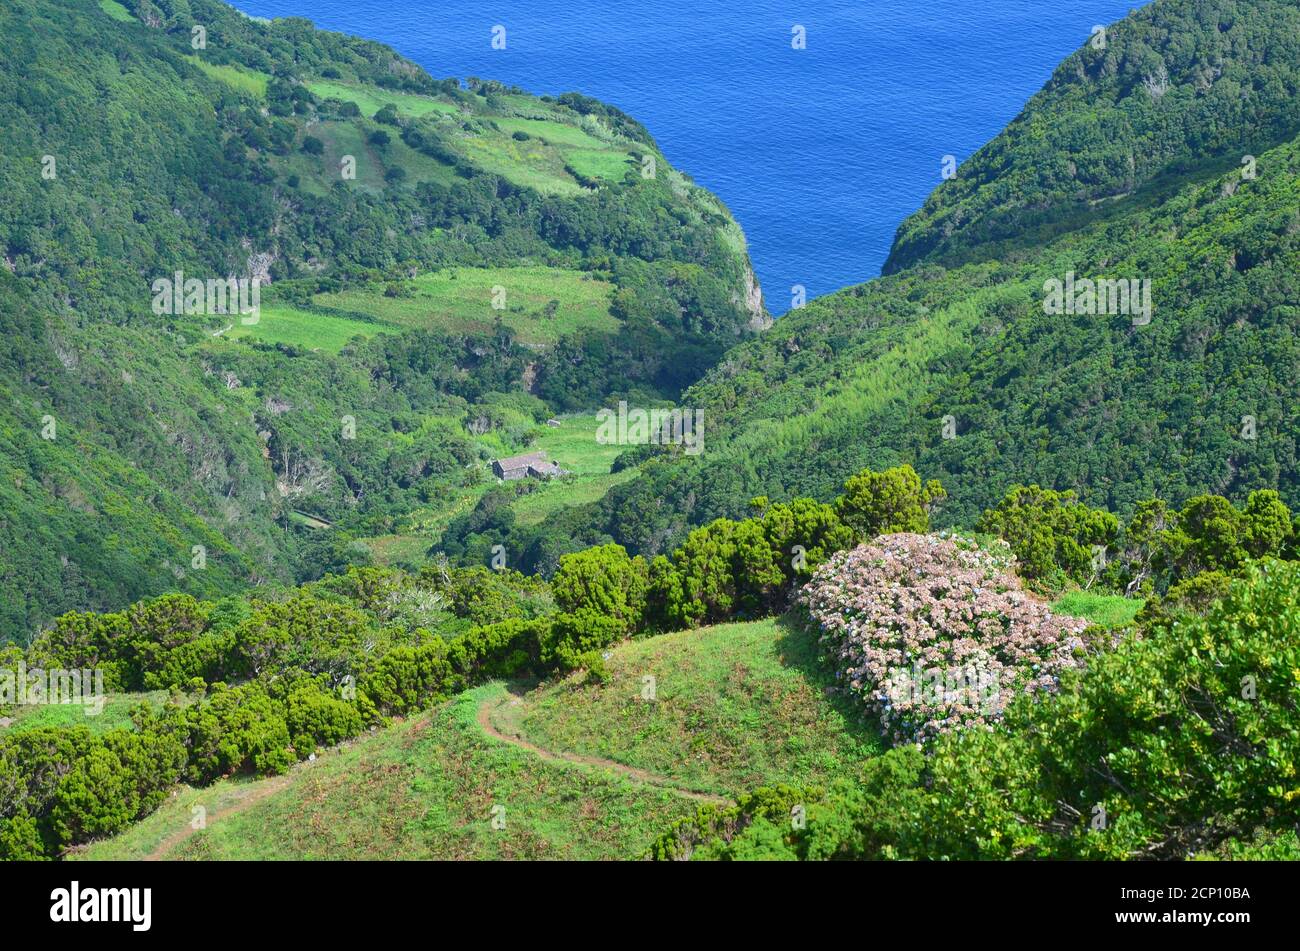 Laurisilva forest in Sao Jorge island, Azores archipelago, Portugal Stock Photo